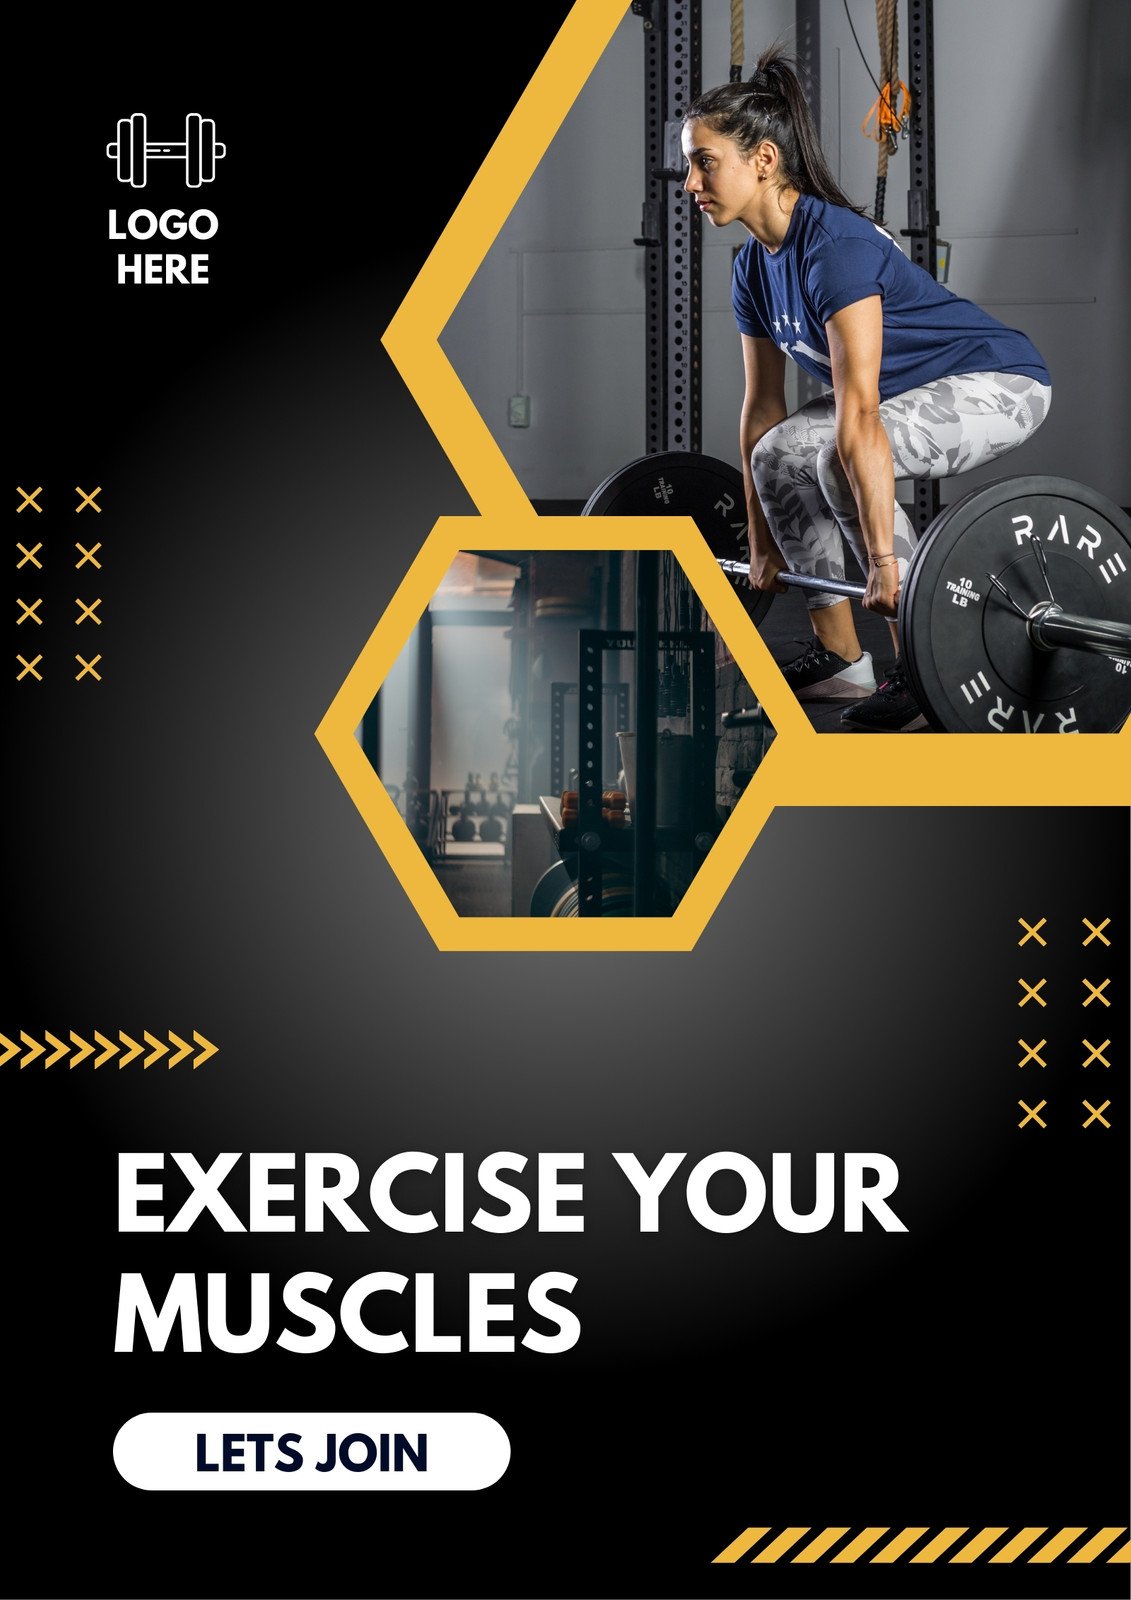 Free printable and customizable gym poster templates